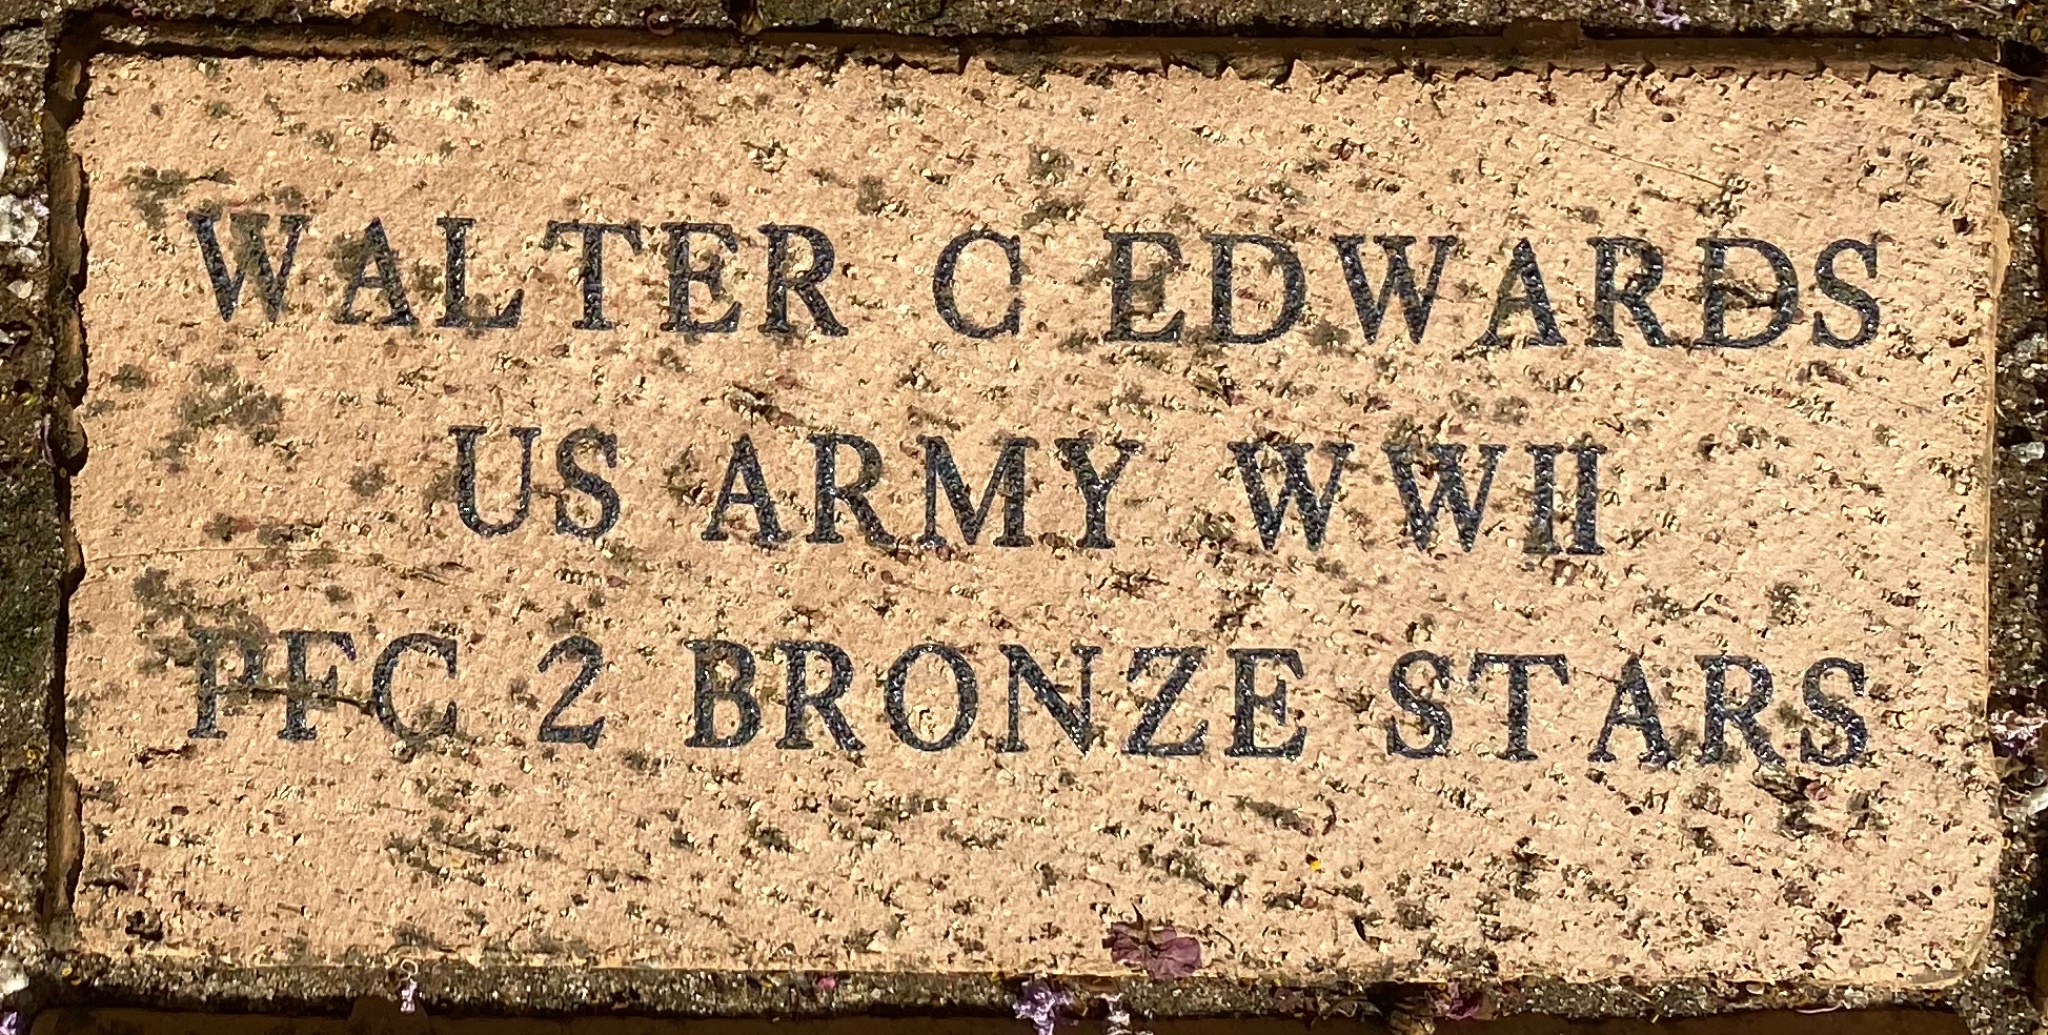 WALTER C EDWARDS US ARMY WWII PFC 2 BRONZE STARS